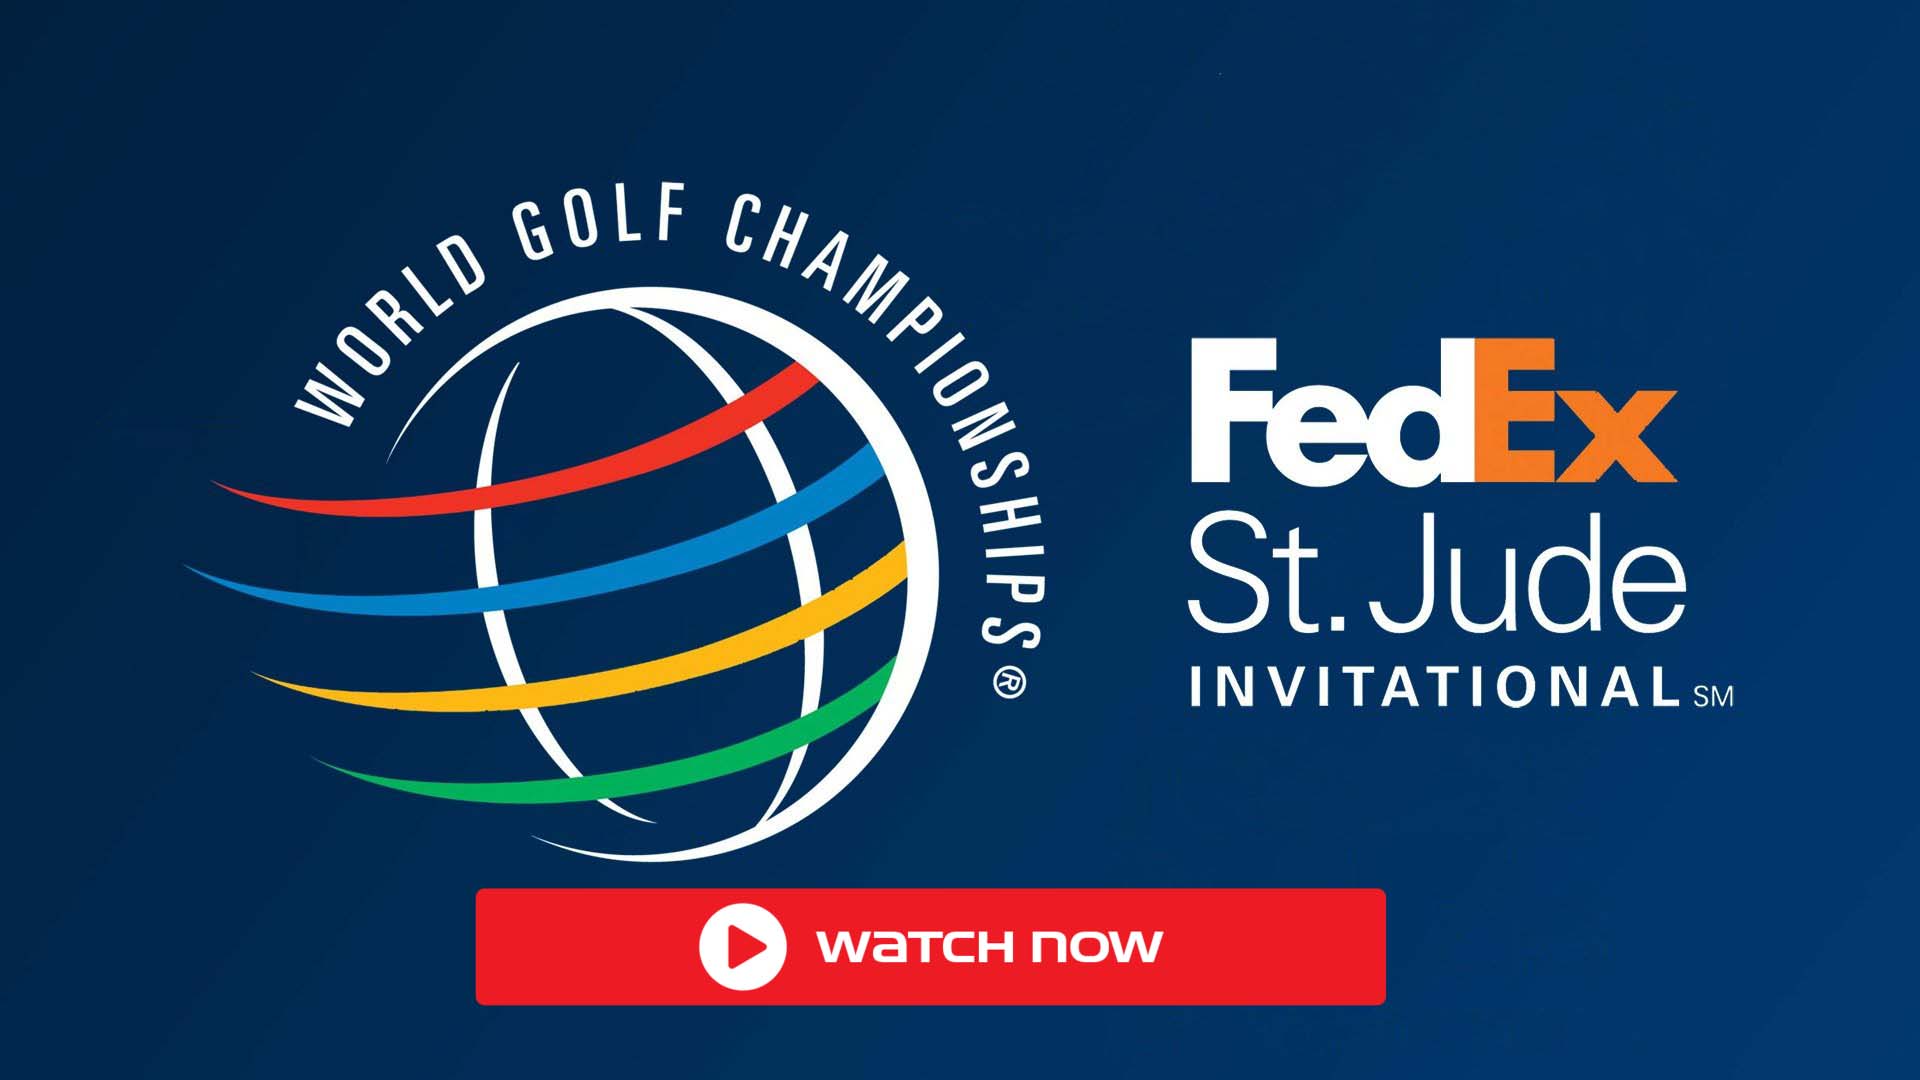 [LIVE] WGC-FedEx St. Jude Invitational 2021: Live Stream, TV Coverage